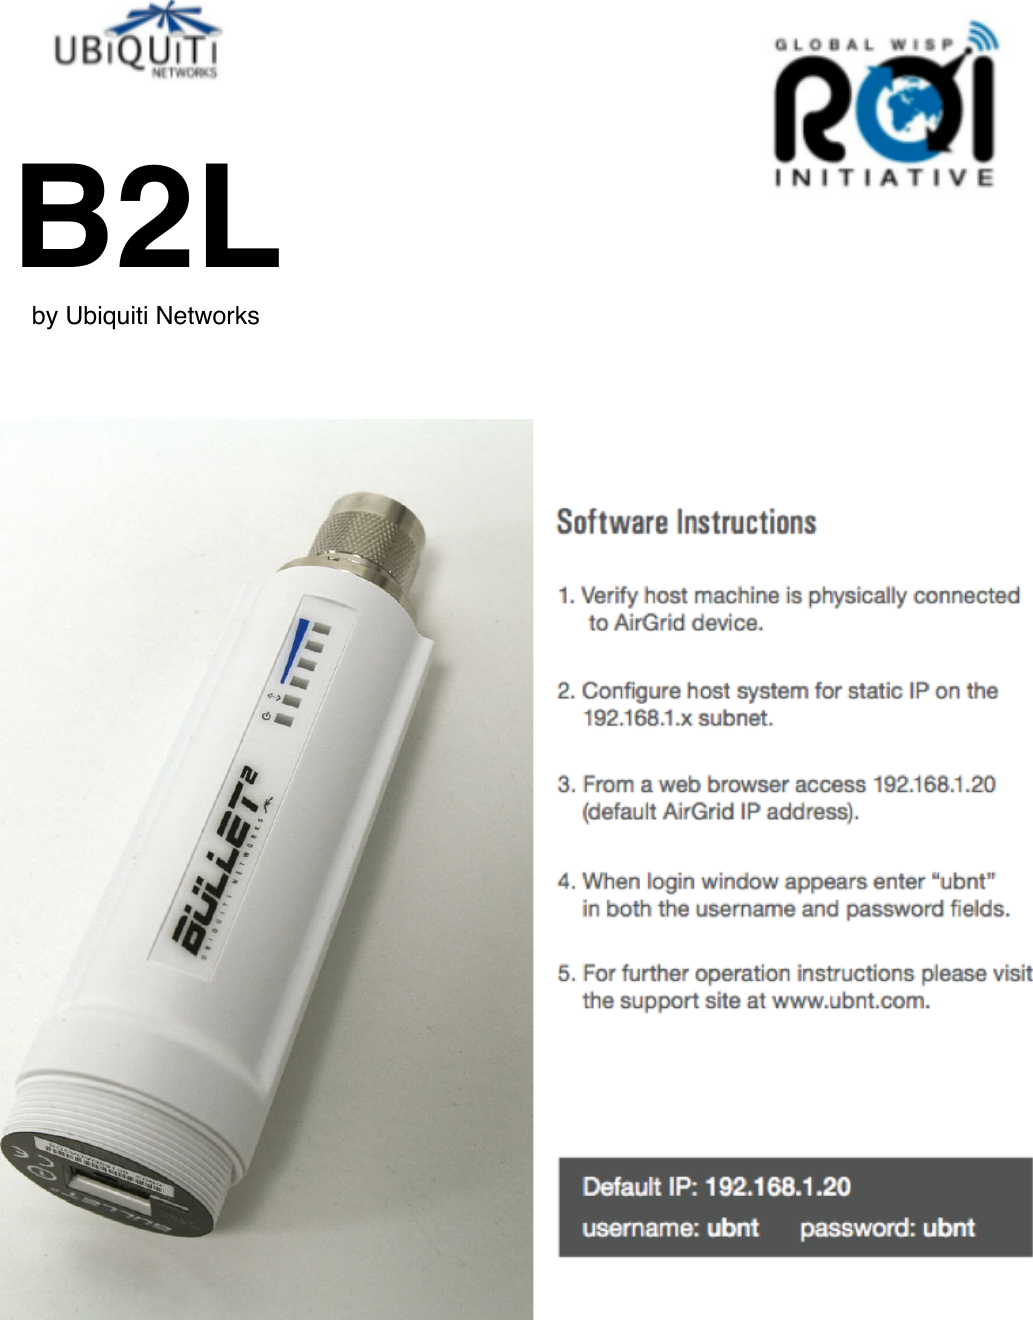 B2L by Ubiquiti Networks